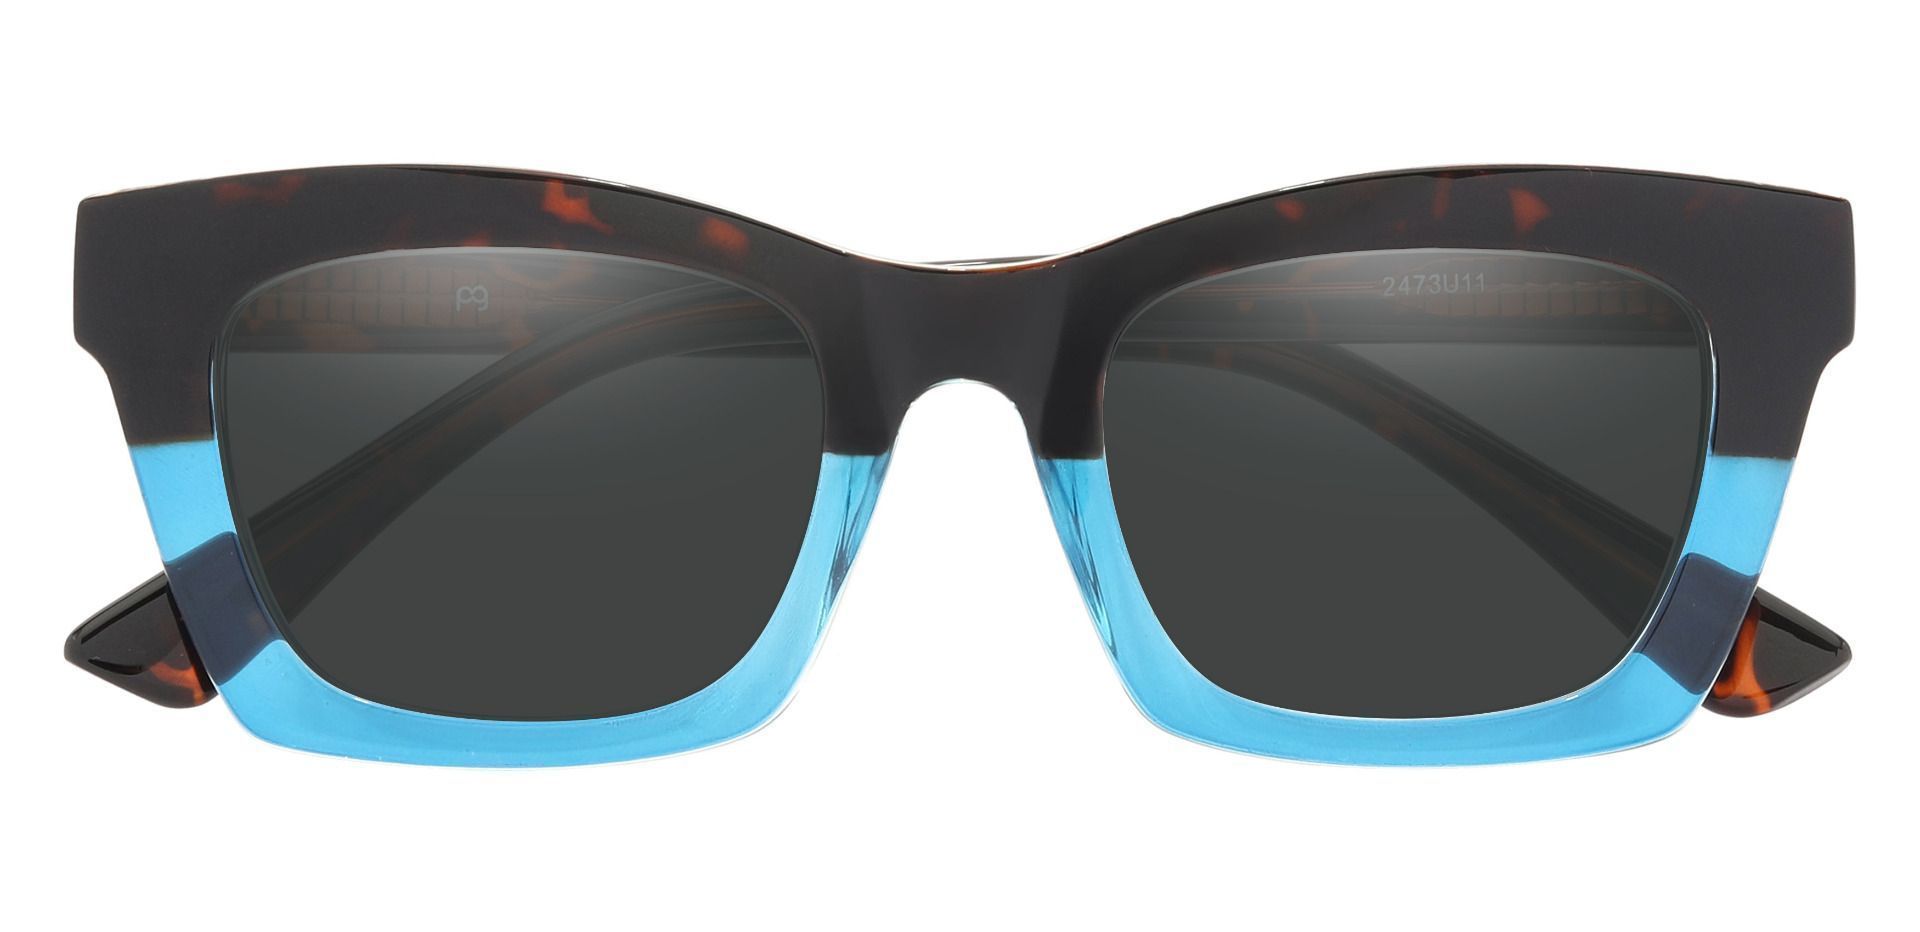 McKee Rectangle Prescription Sunglasses - Blue Frame With Gray Lenses